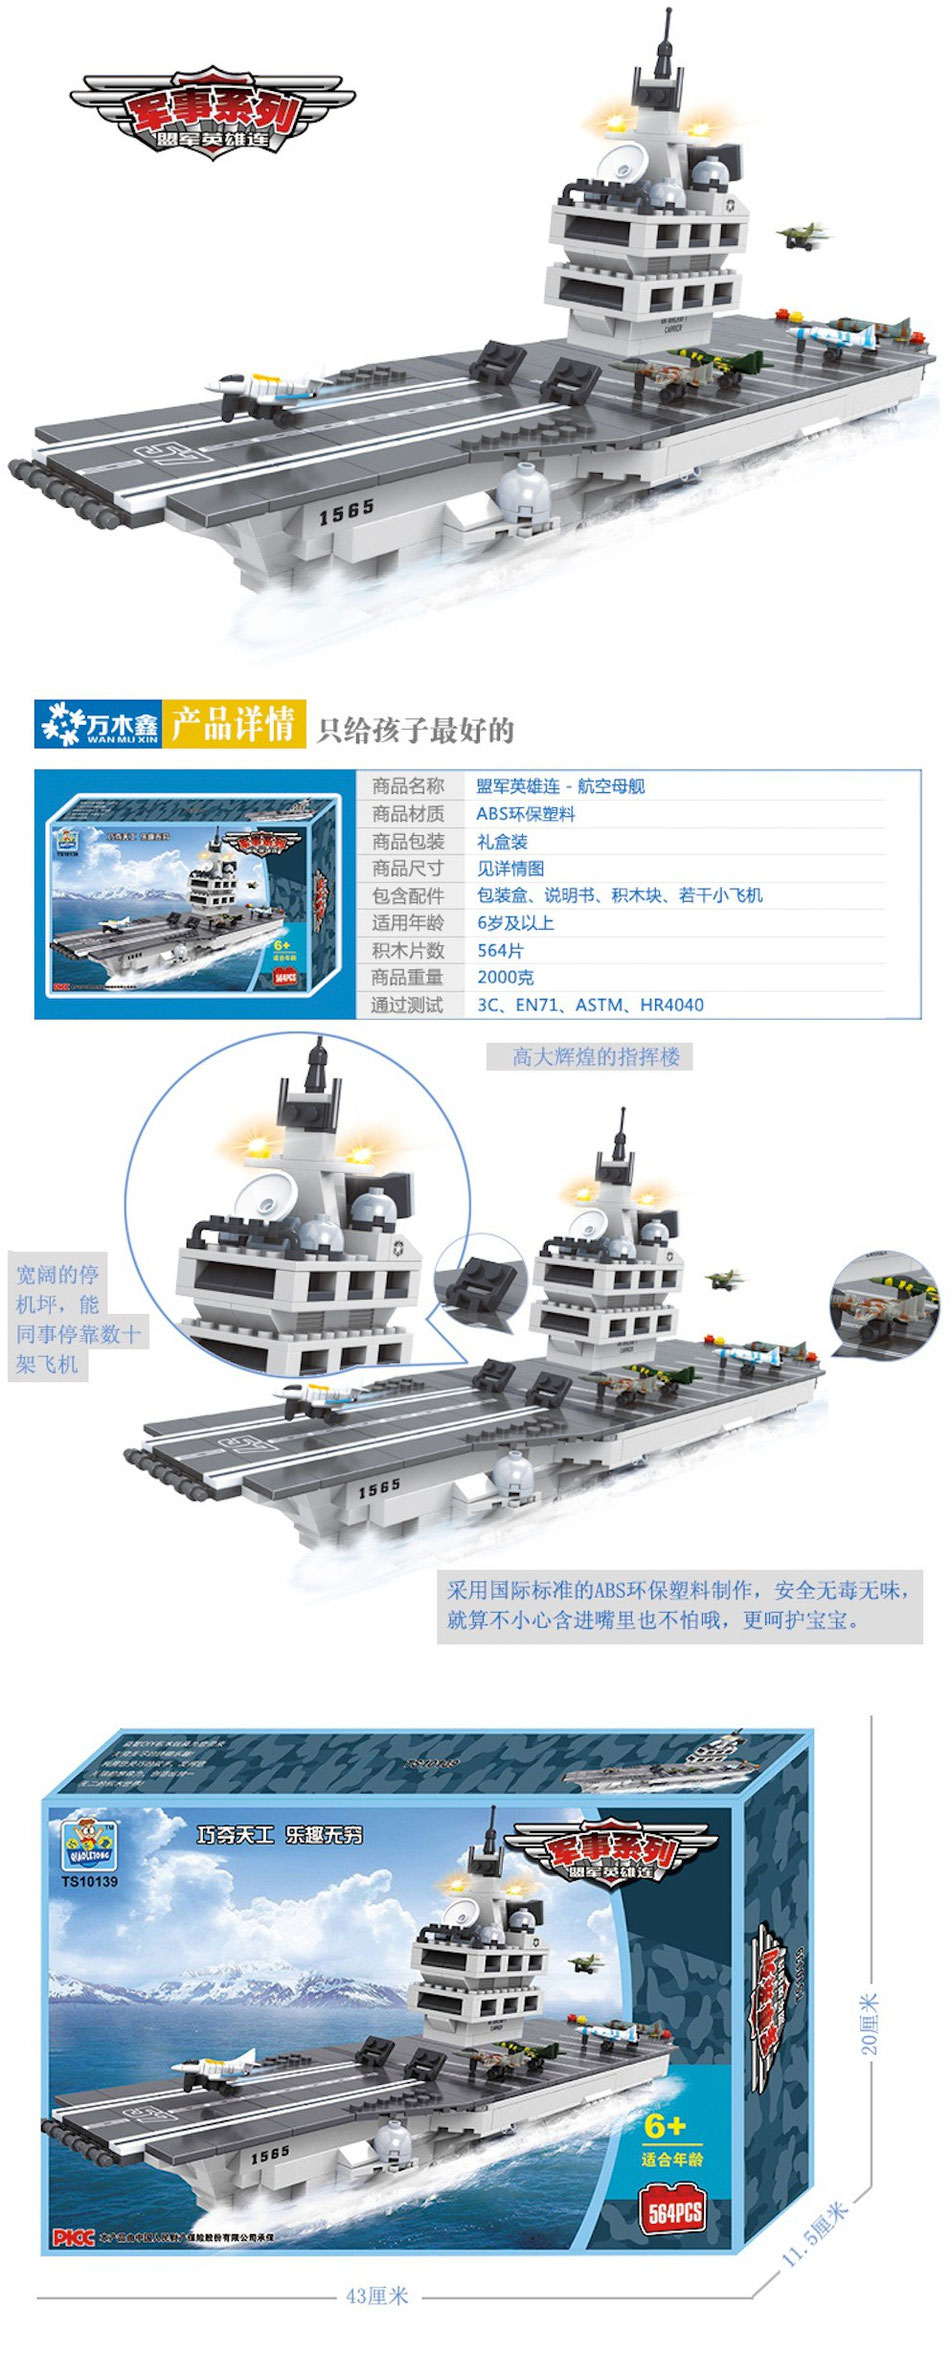 qiaoletong building bricks blocks aircraft carrier lego compatible